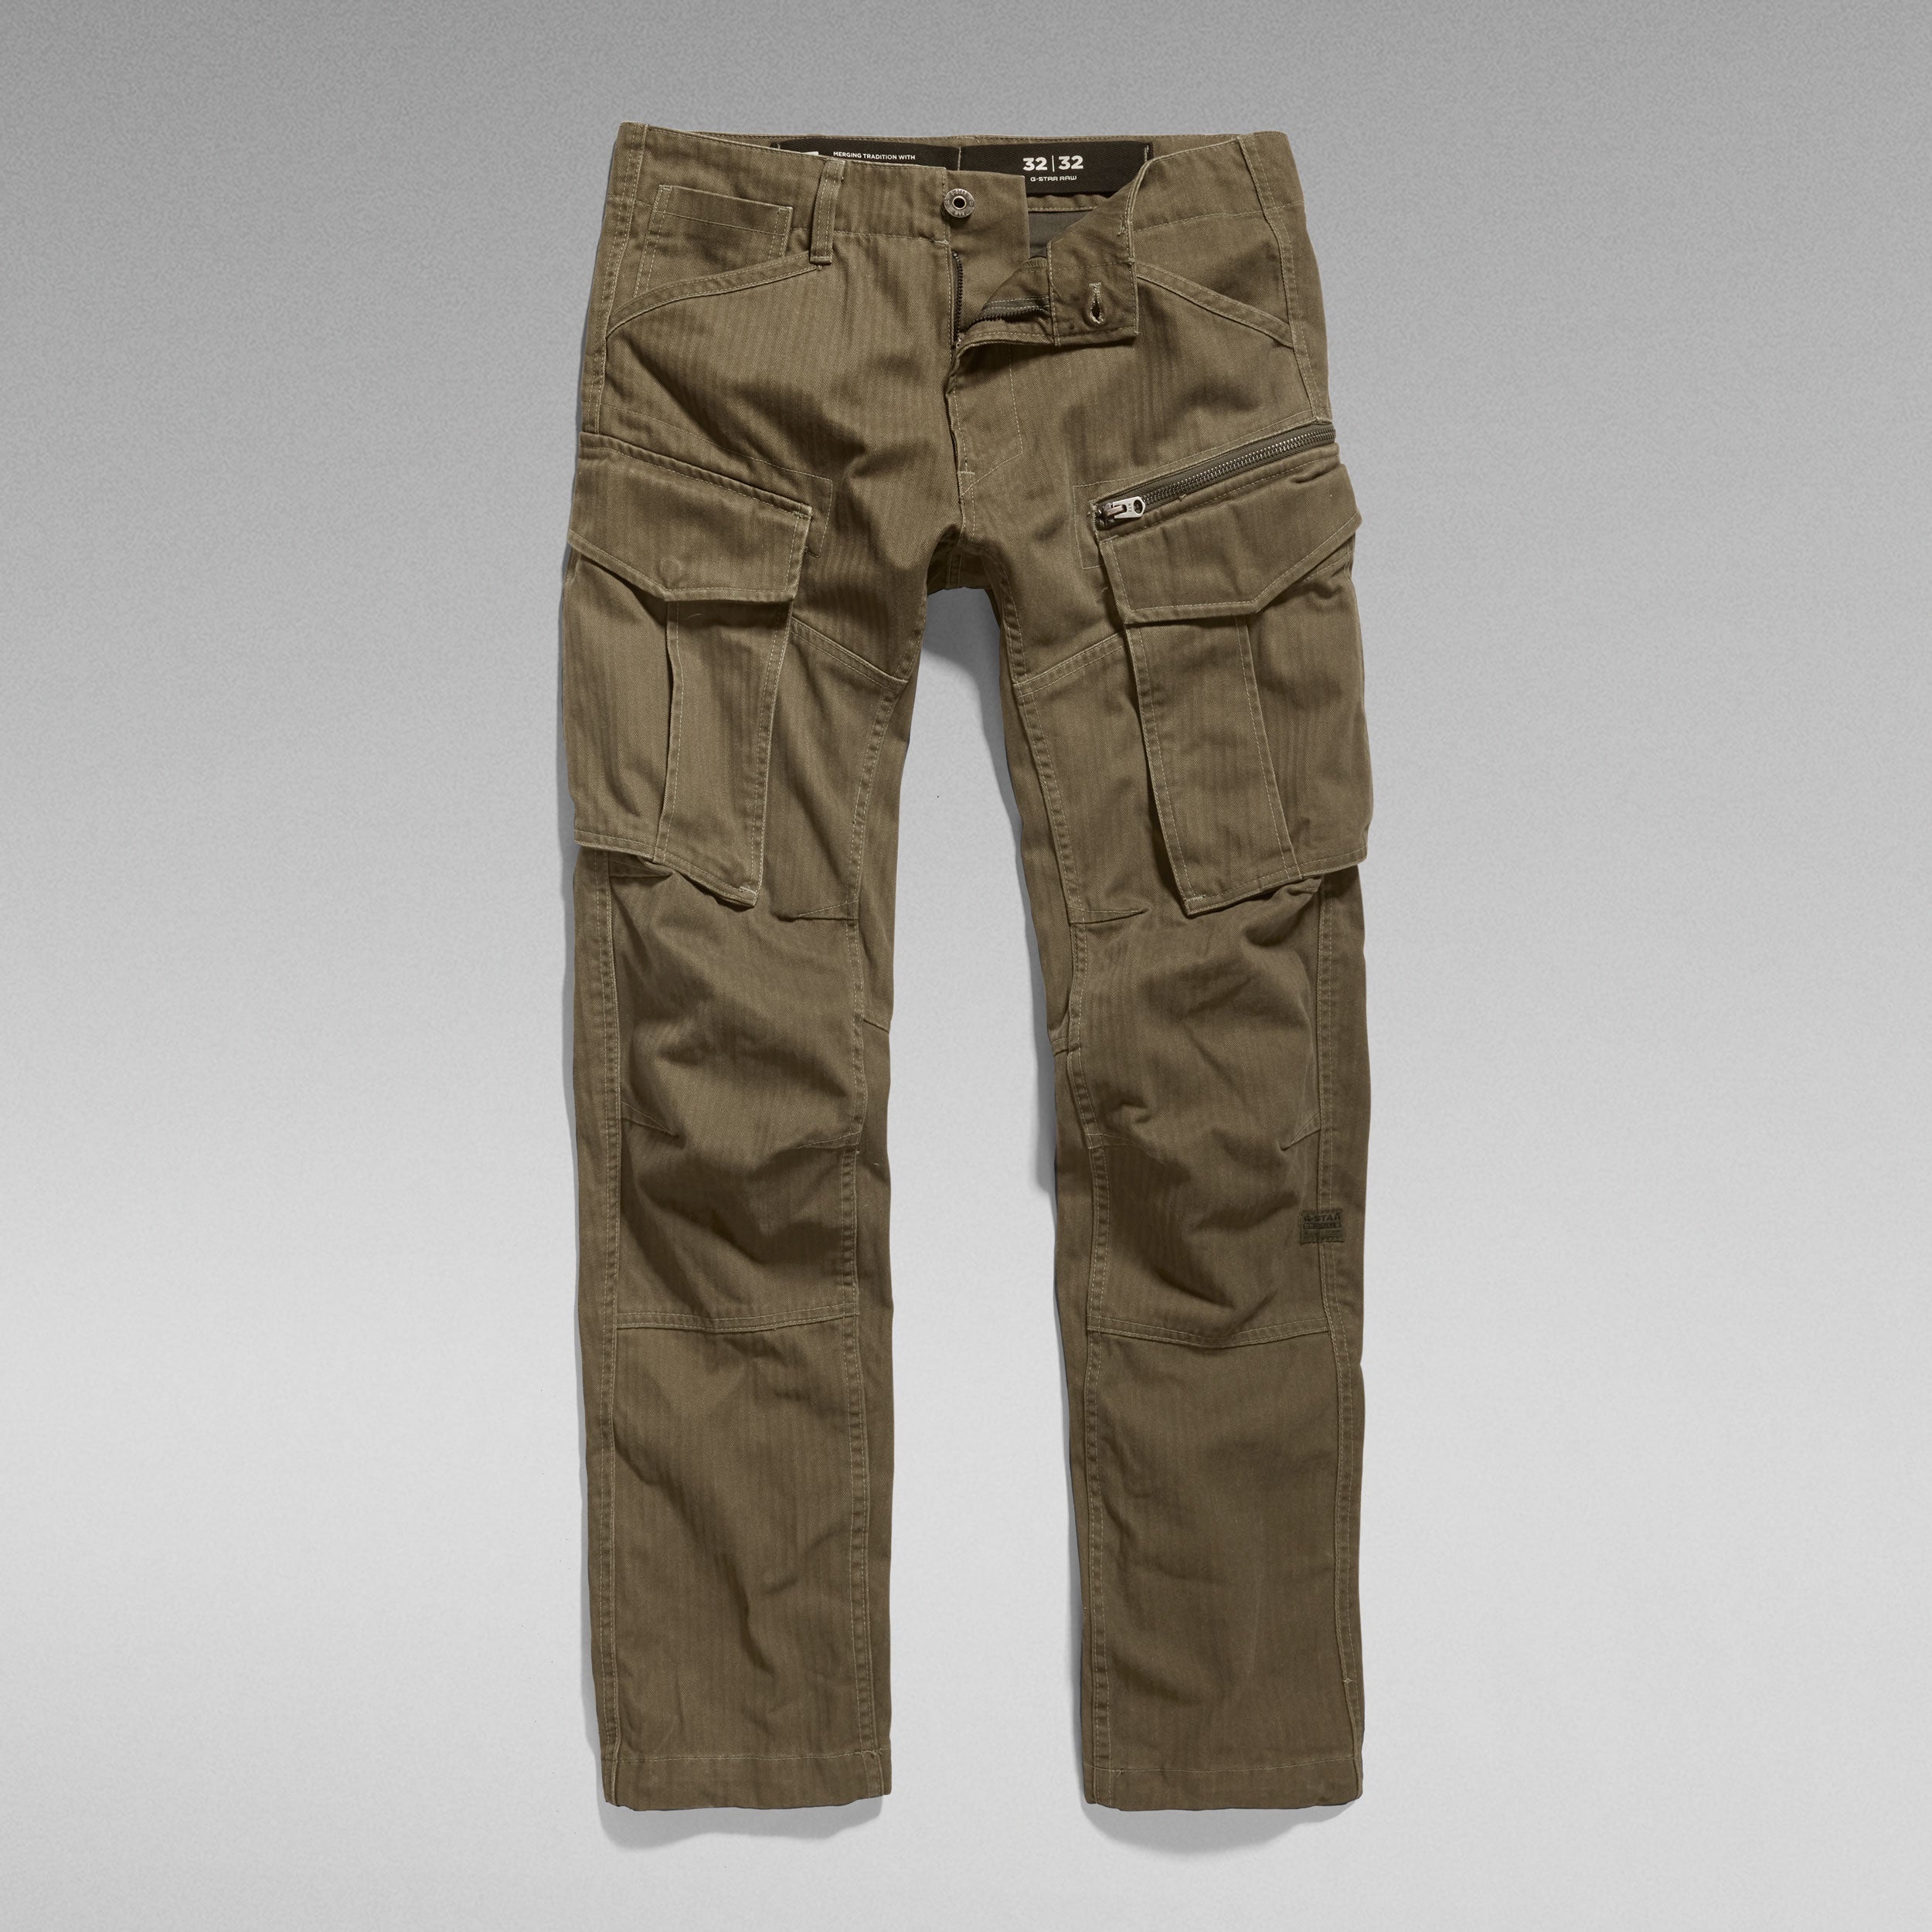 G-Star Raw Men's Rovic Zip Regular Tapered Cargo Pants Blue $190 New | eBay